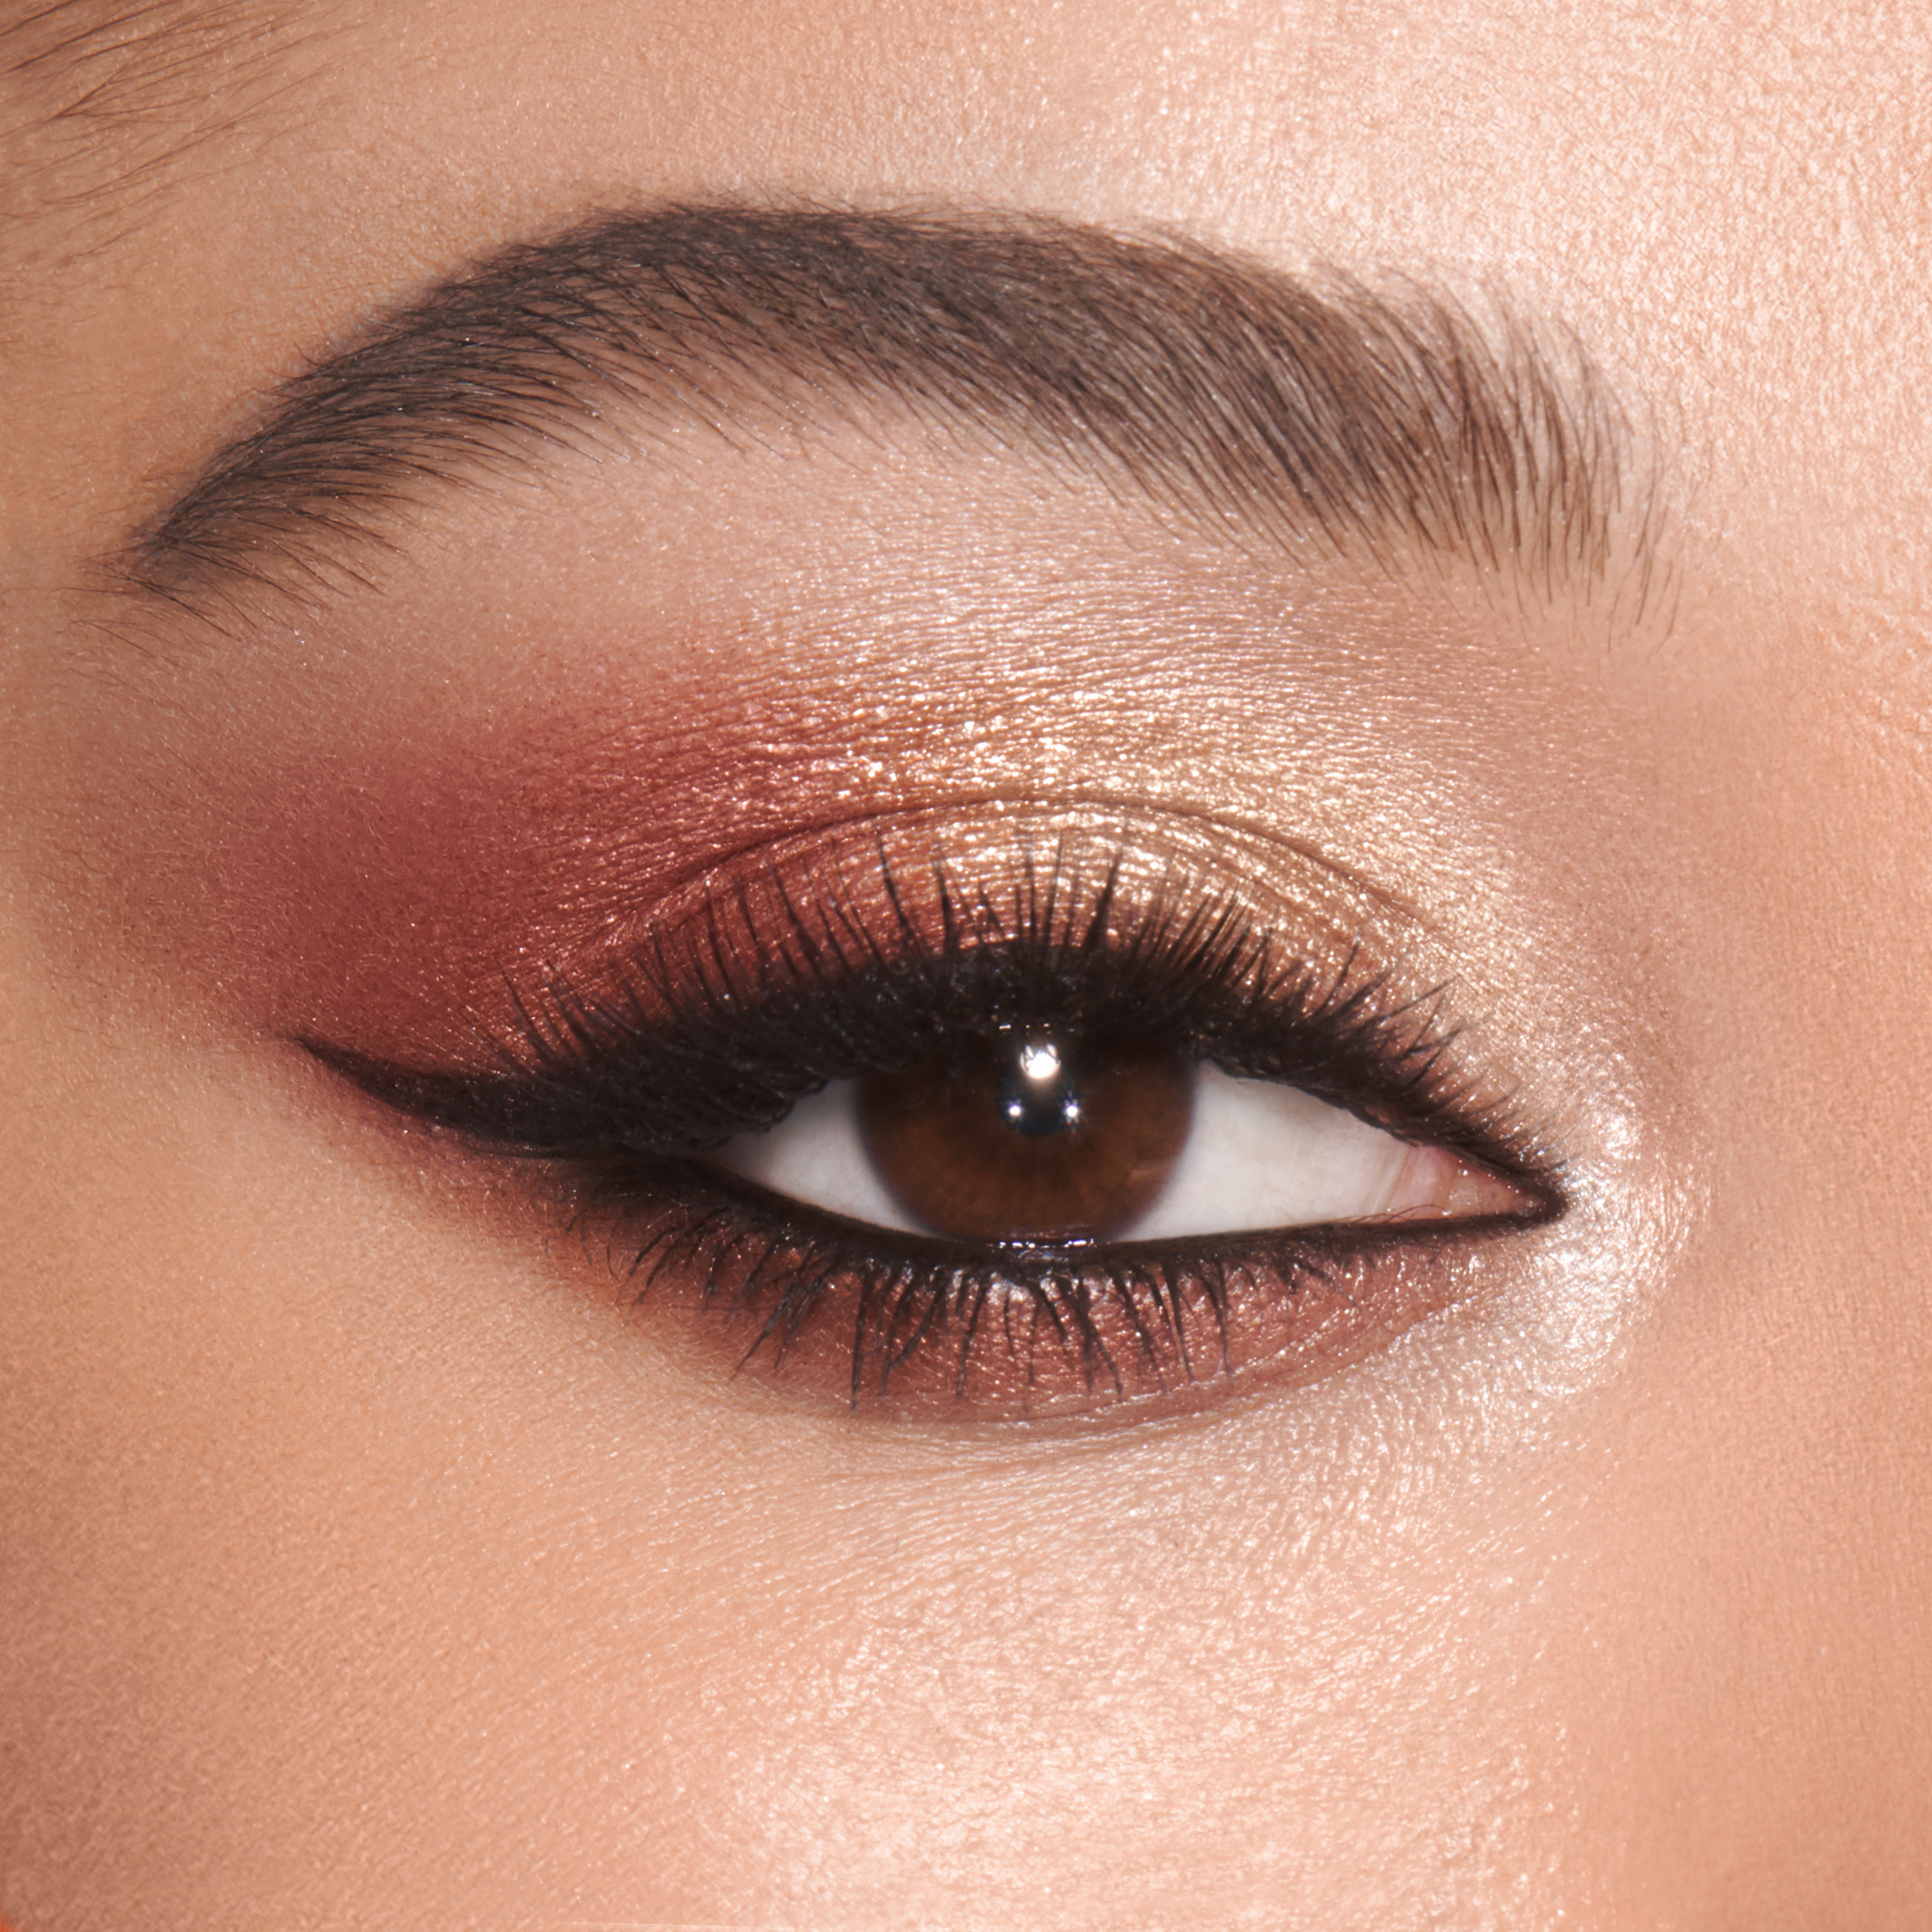 The Bella Sofia eye close up - How to apply eyeshadow